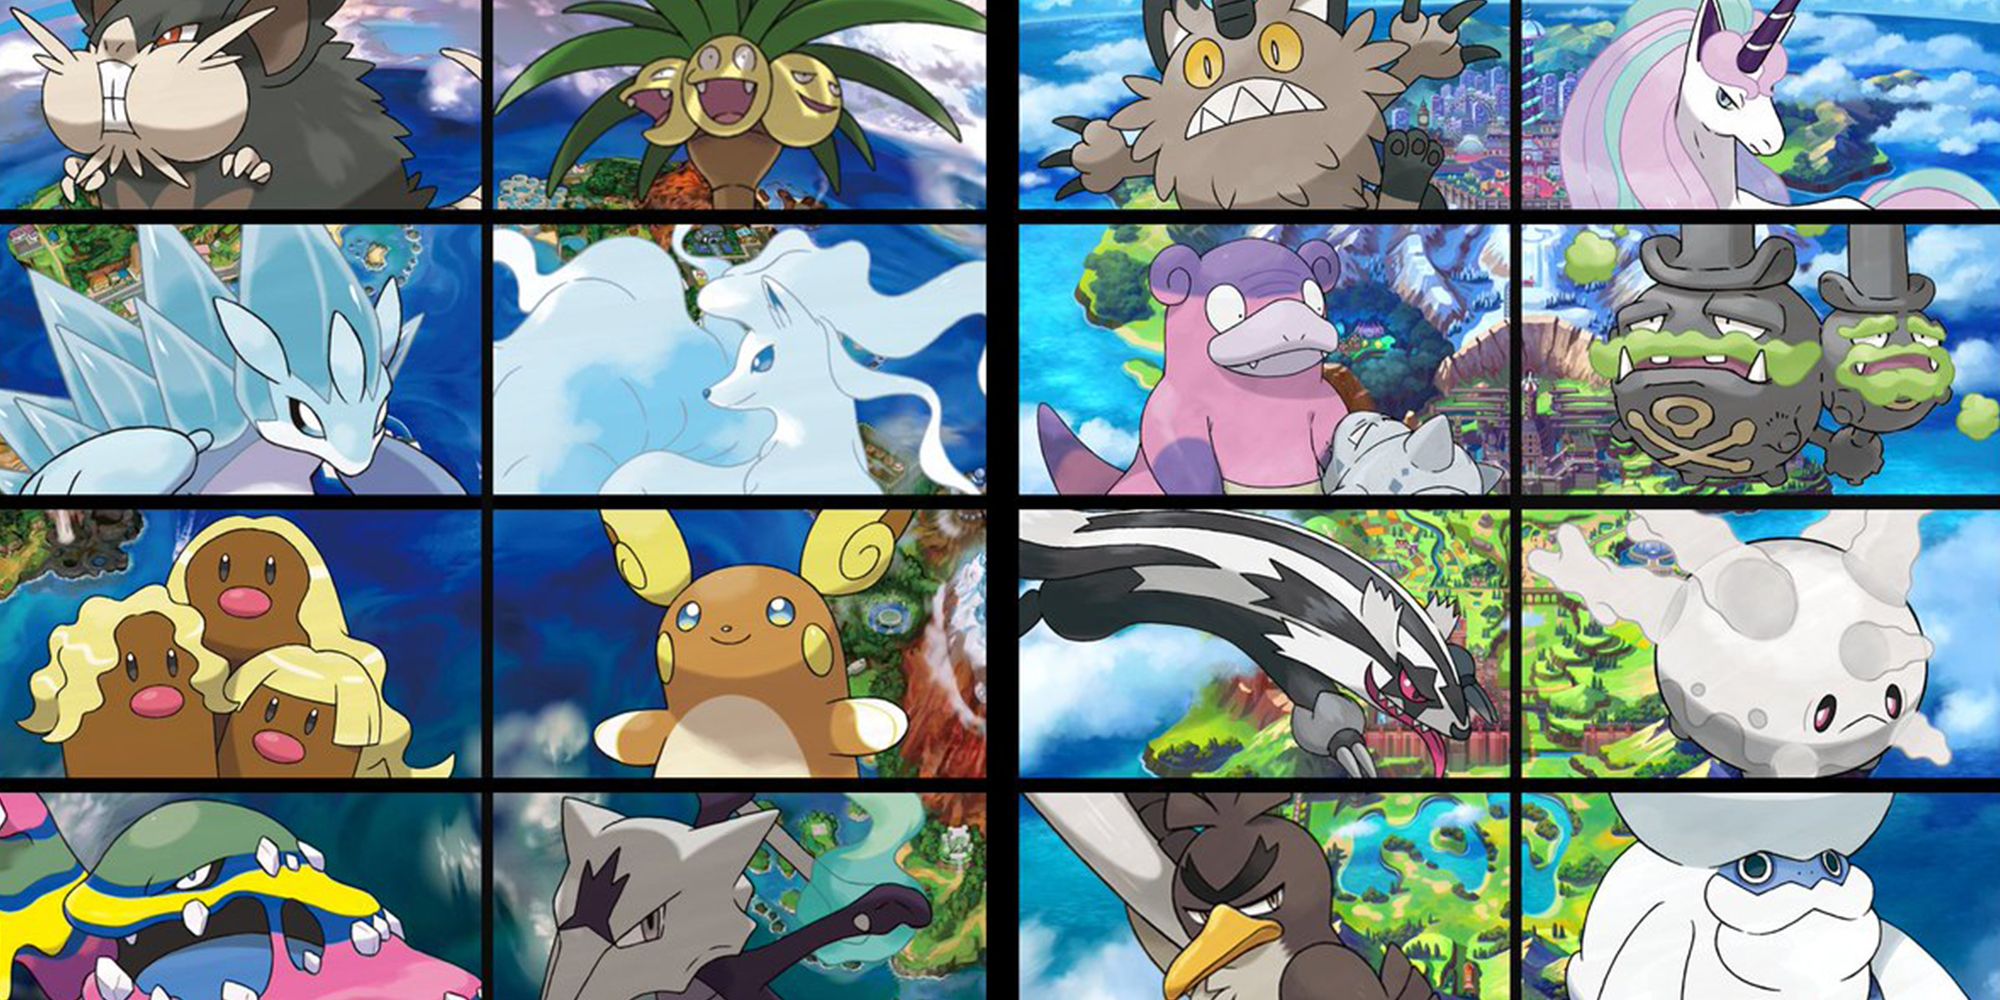 All Pokémon Regional Forms Comparison (Alolan-Galarian) 